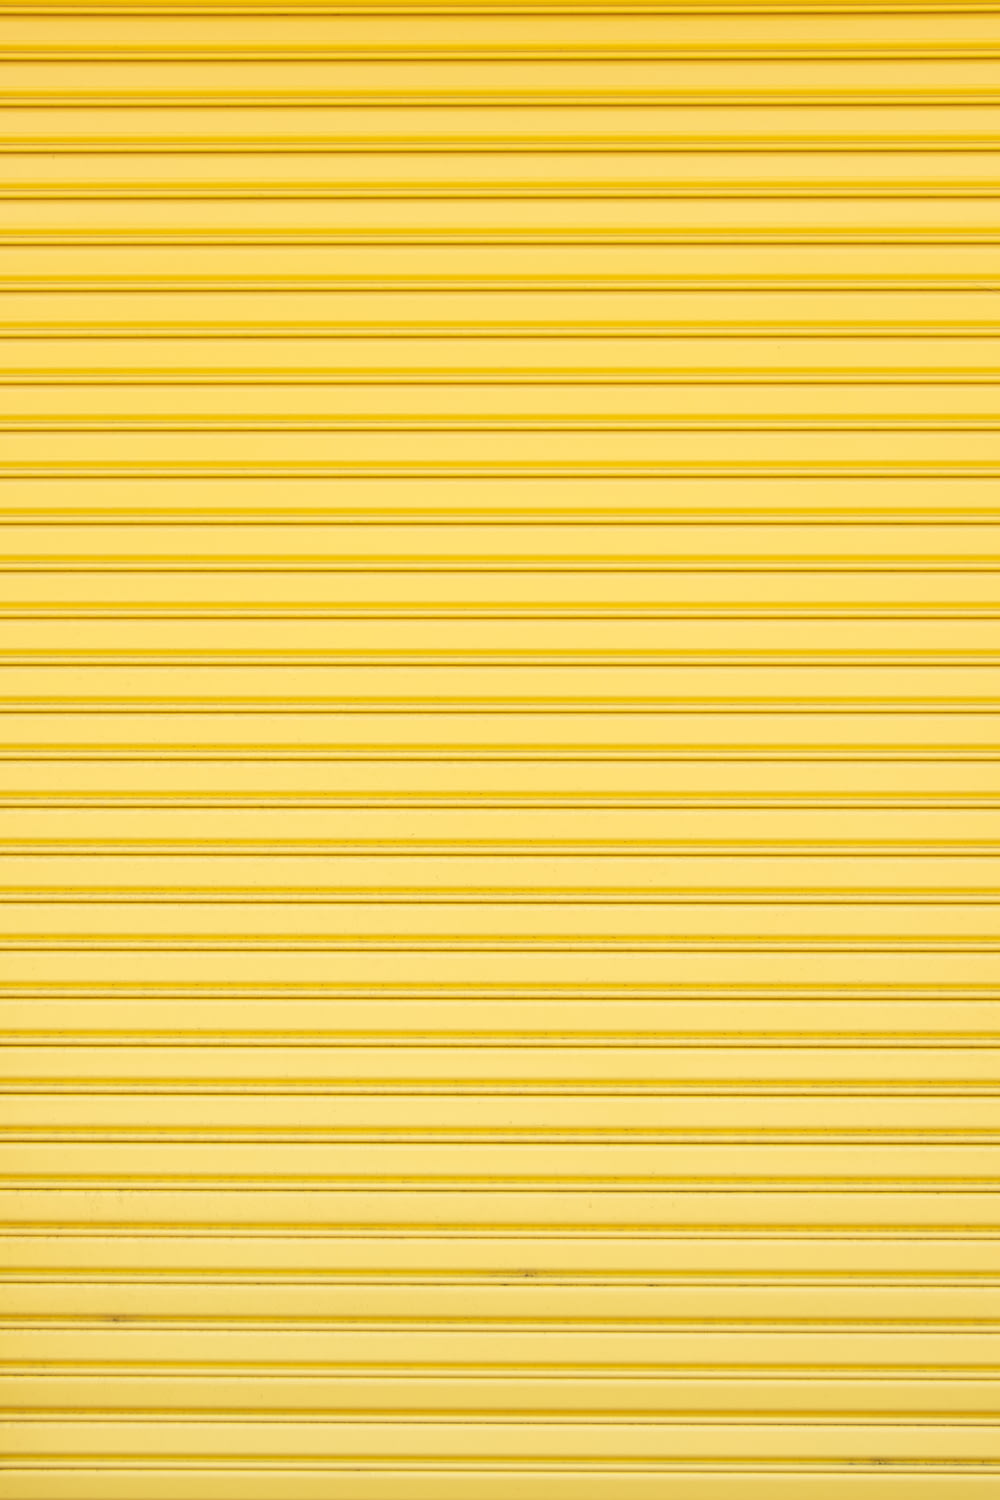 a yellow garage door that is closed